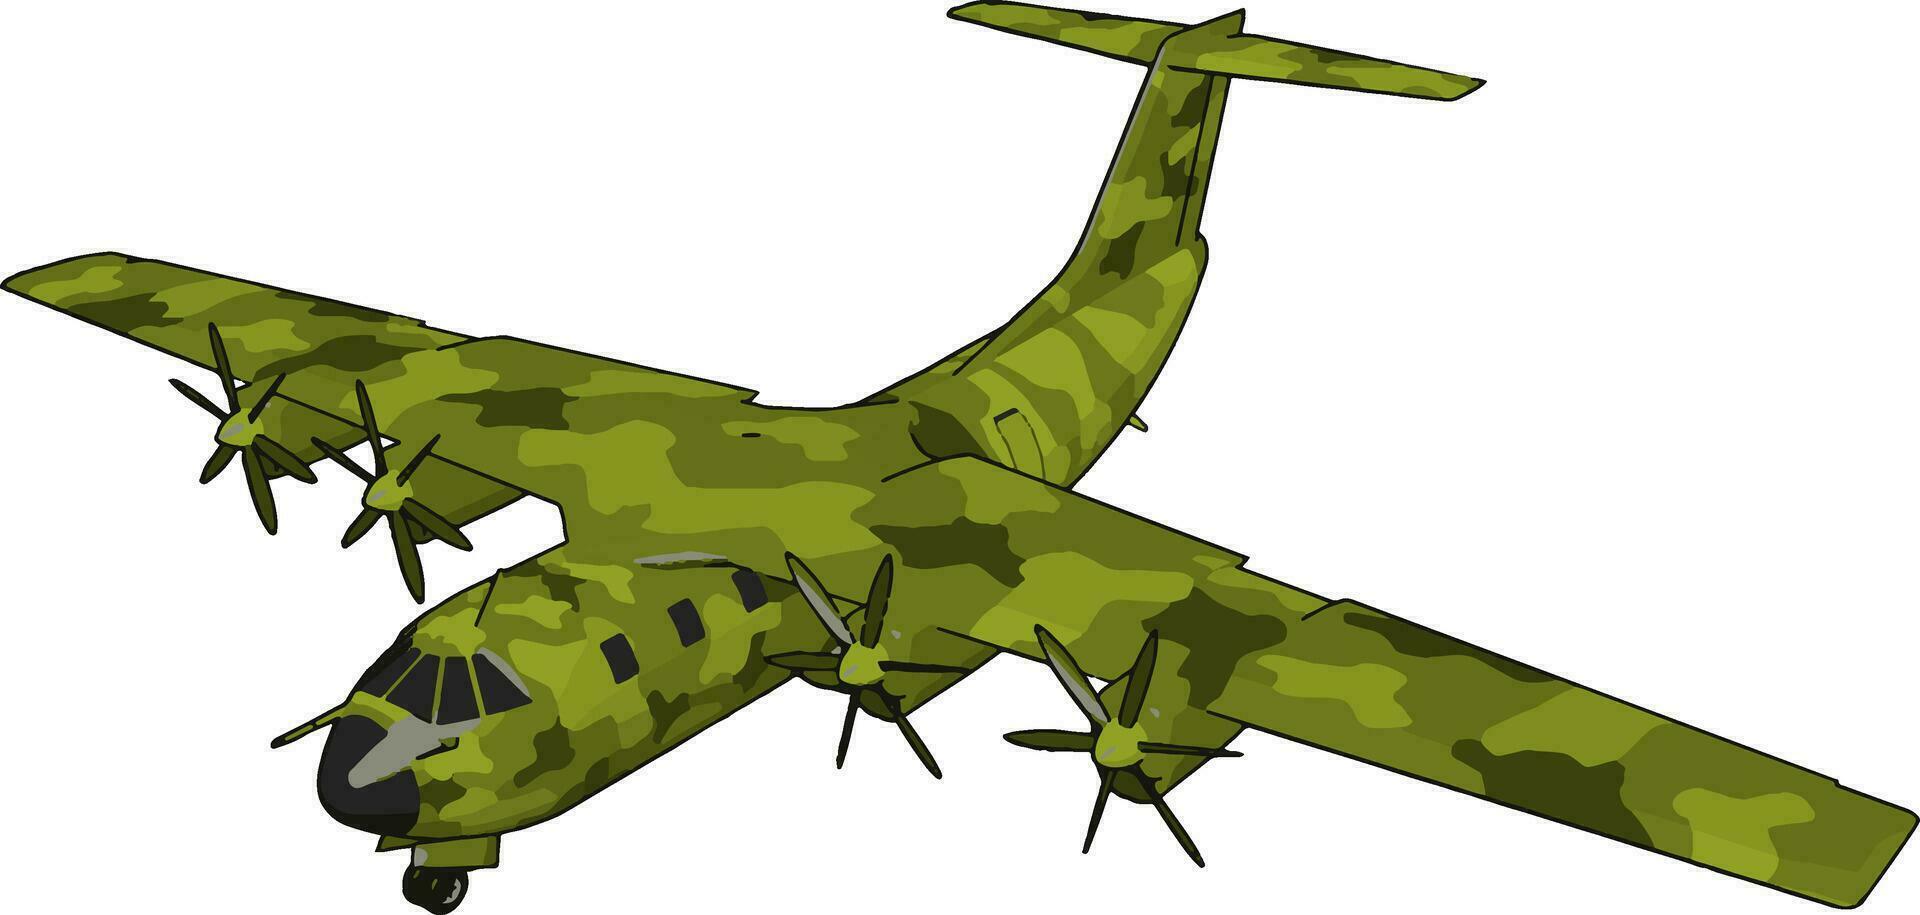 Big old green bomber, illustration, vector on white background.